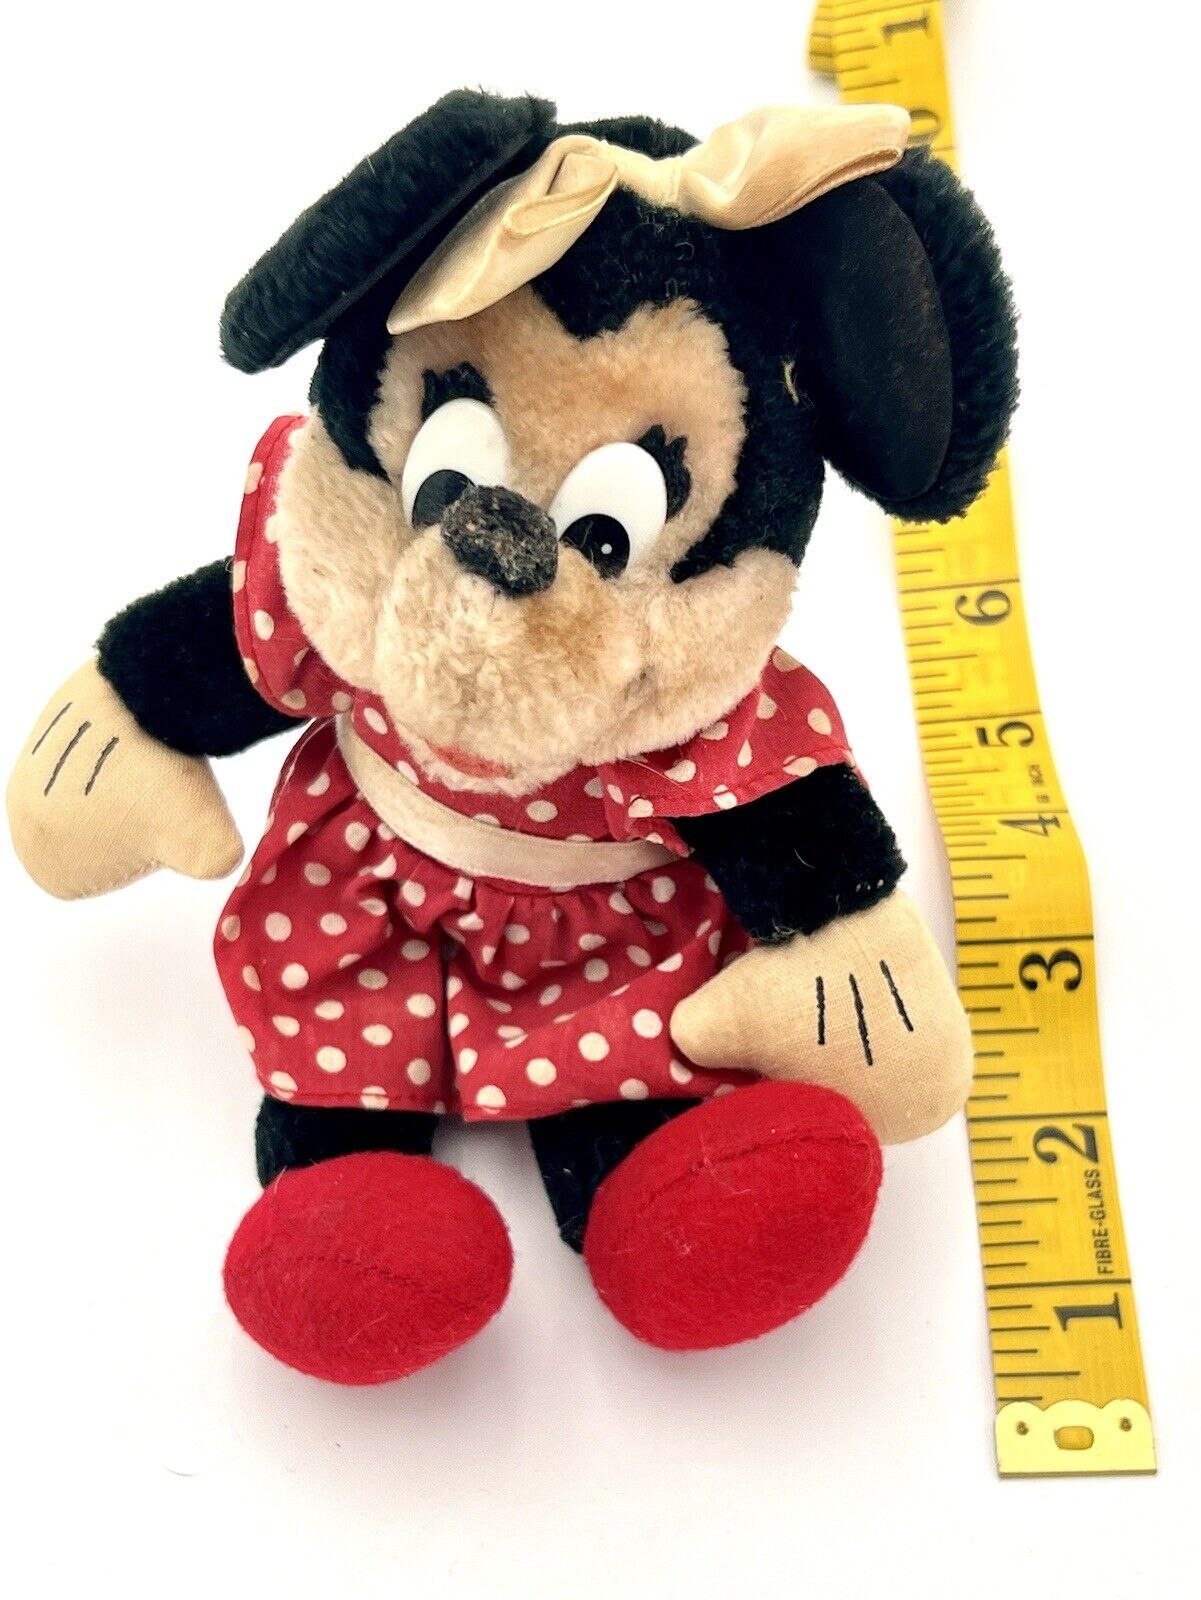 MINNIE MOUSE mini plush toy Applause vtg doll Disney in polka-dot dress 